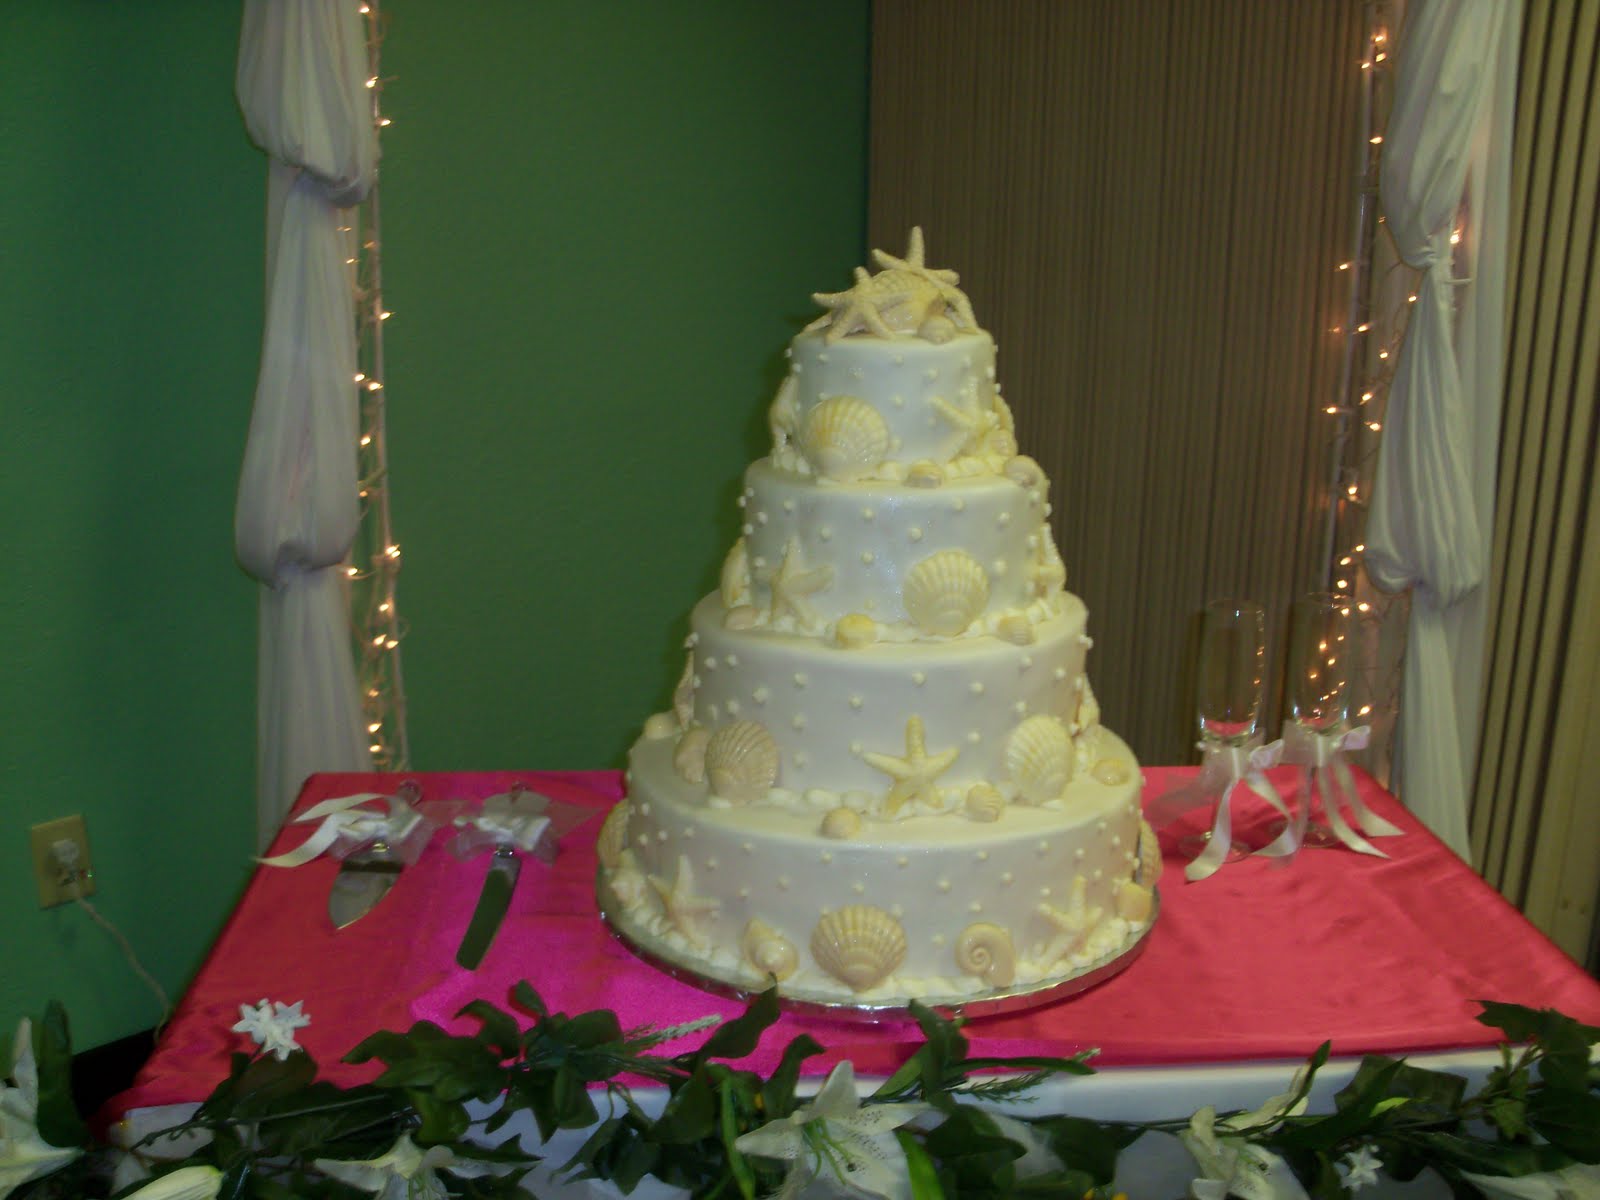 The Beach Themed Wedding Cake,